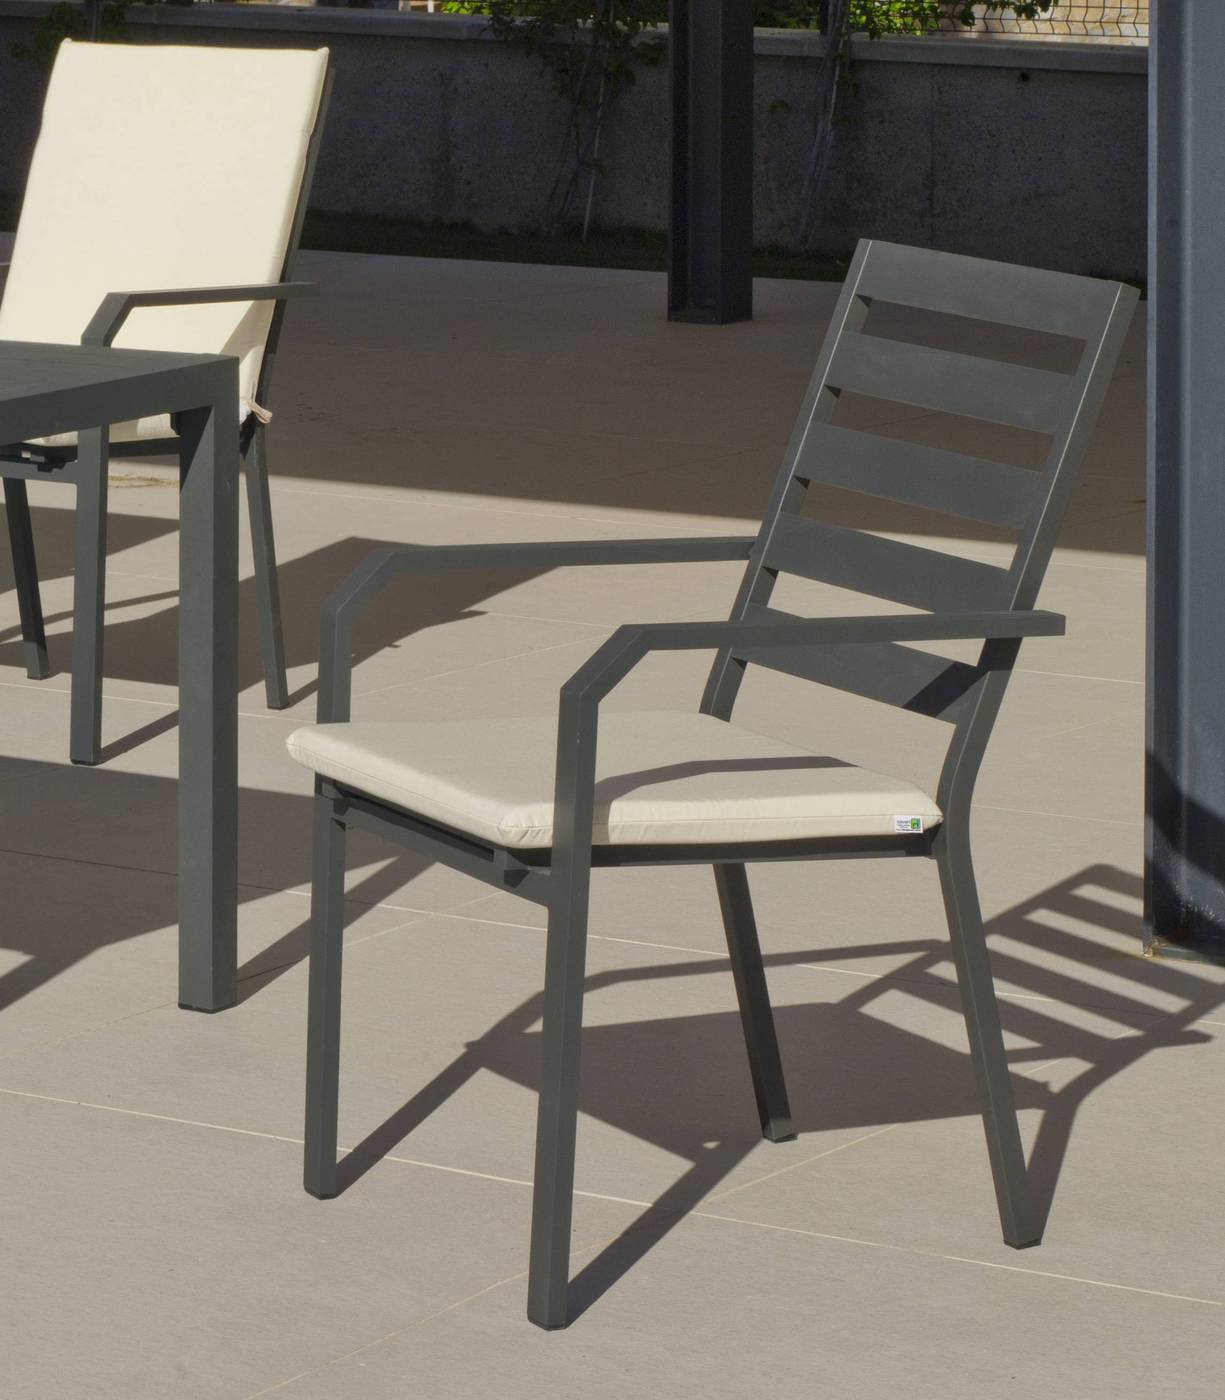 Set Aluminio Palma-Caravel 200-8 - Conjunto aluminio luxe: Mesa rectangular 200 cm + 8 sillones. Disponible en color blanco, plata, bronce, antracita y champagne.